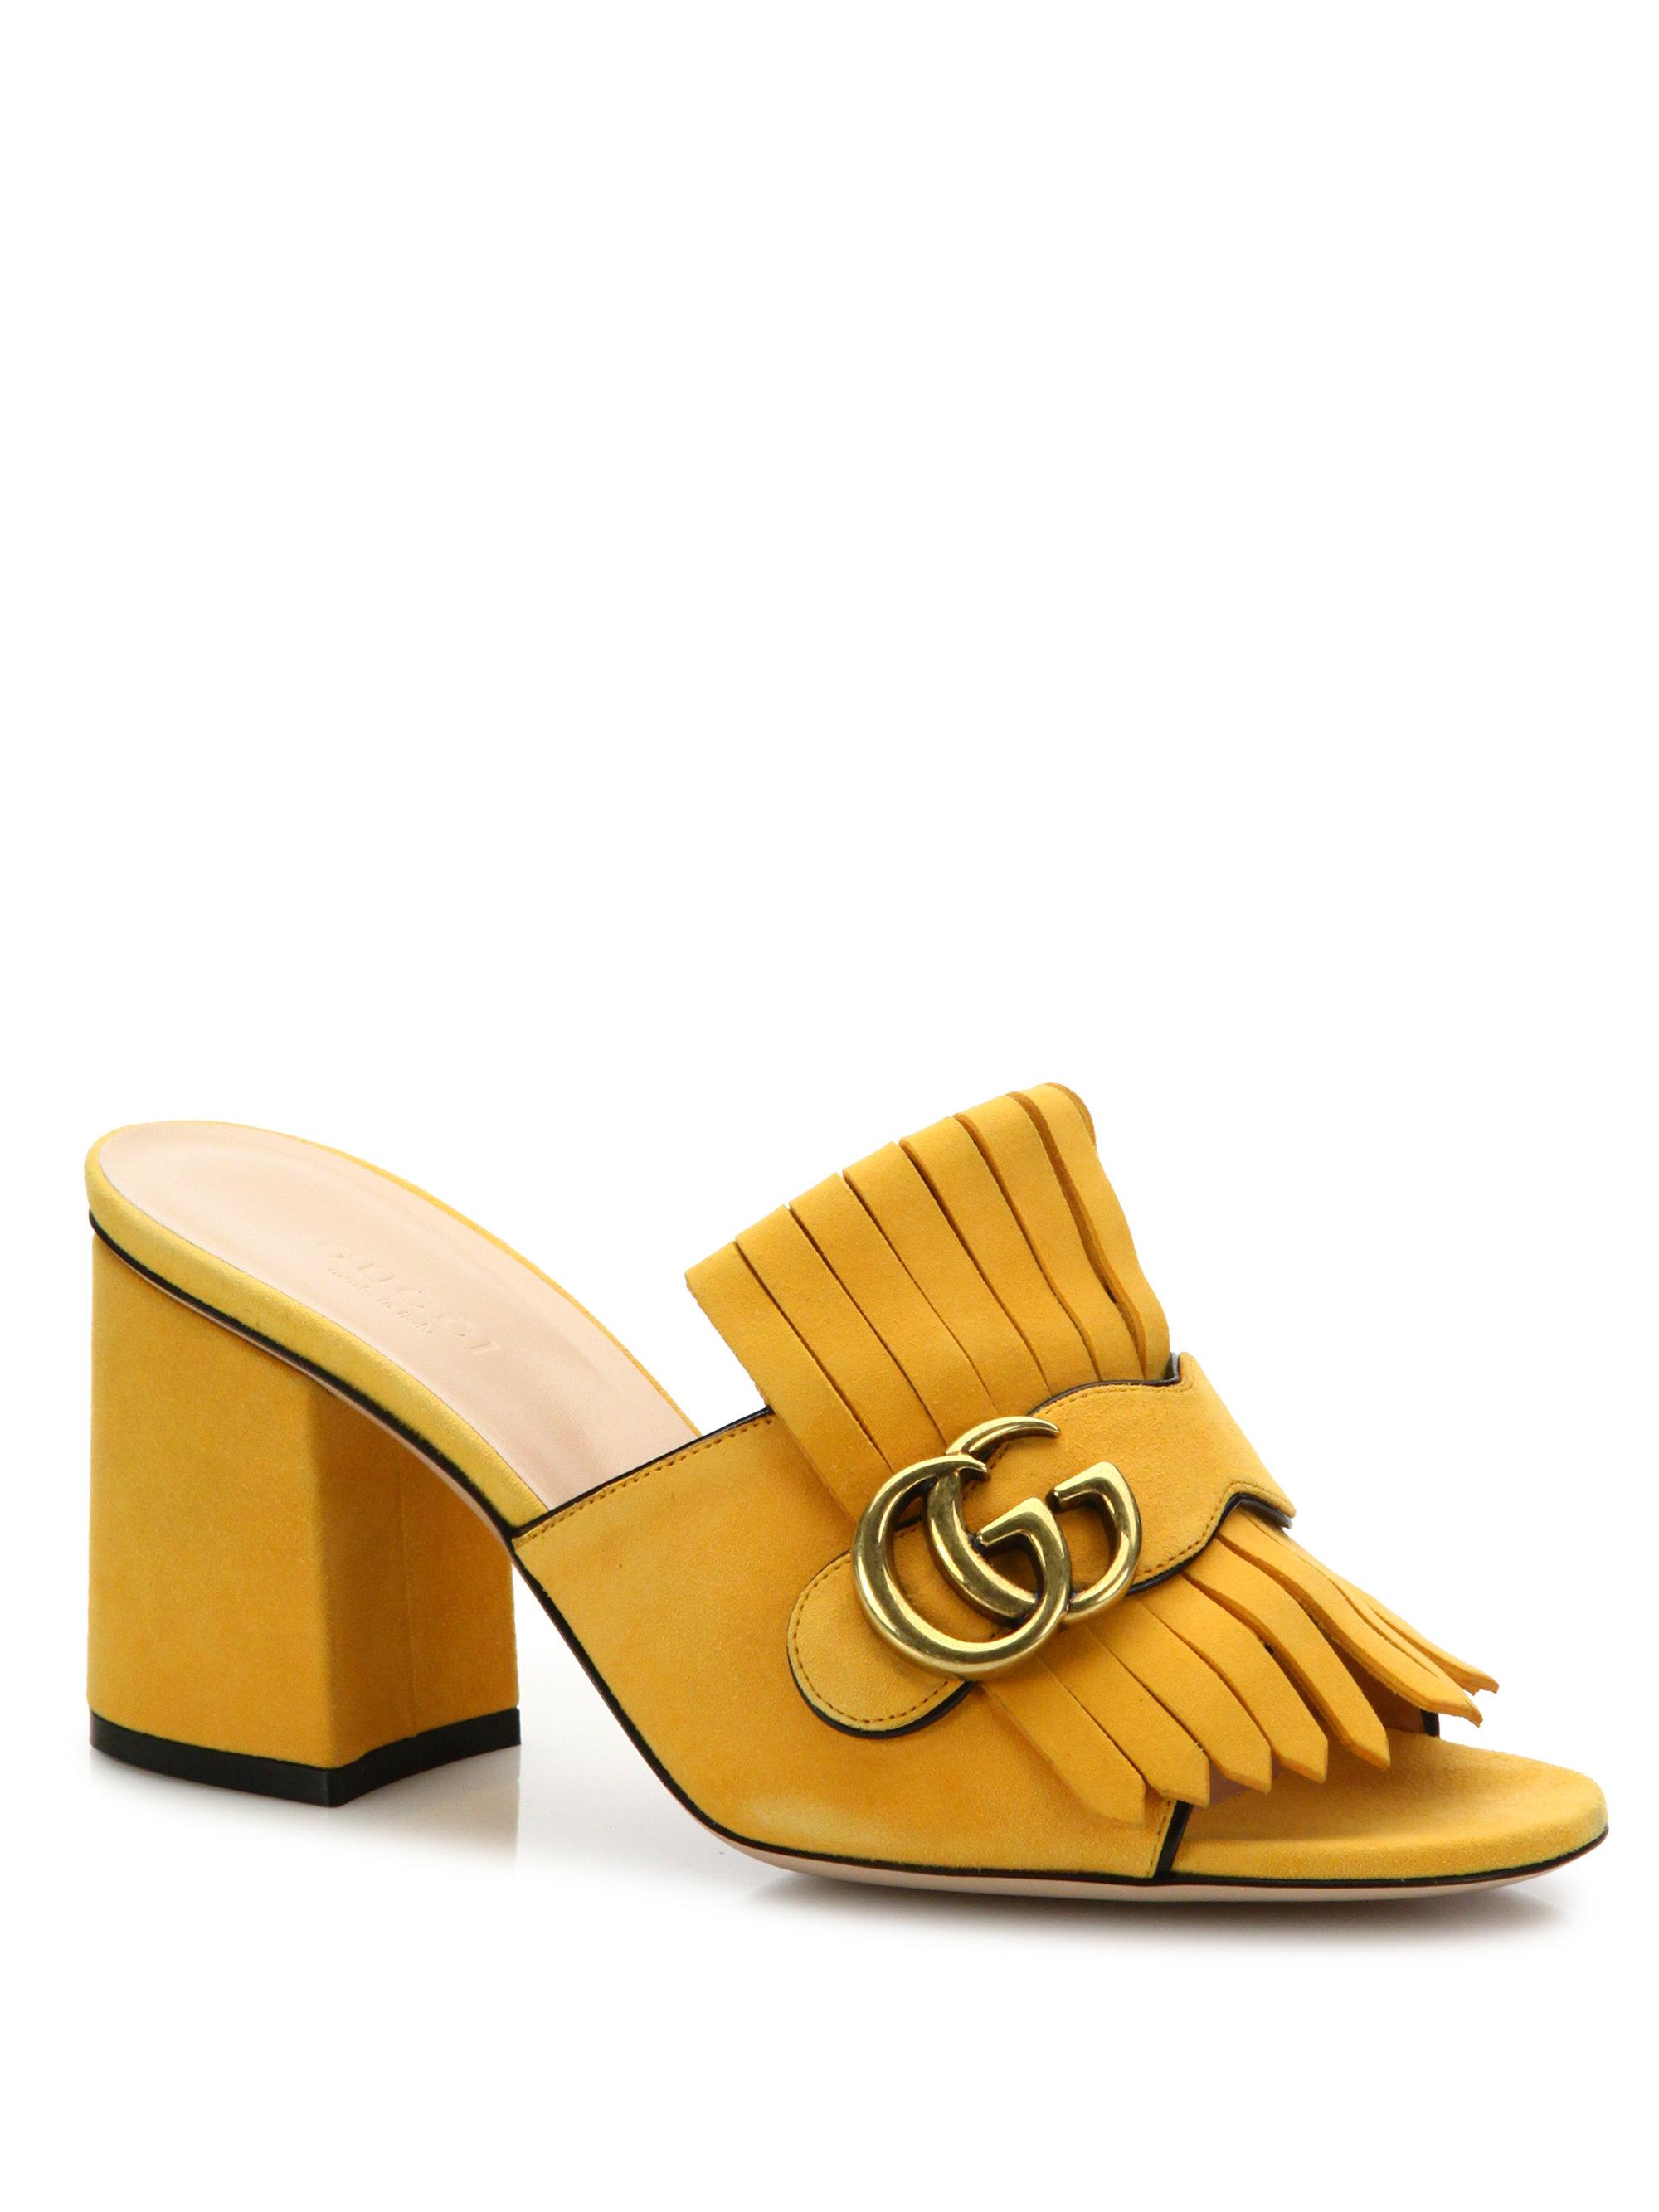 Gucci Marmont Kiltie Suede Block Heel Mules in Yellow | Lyst